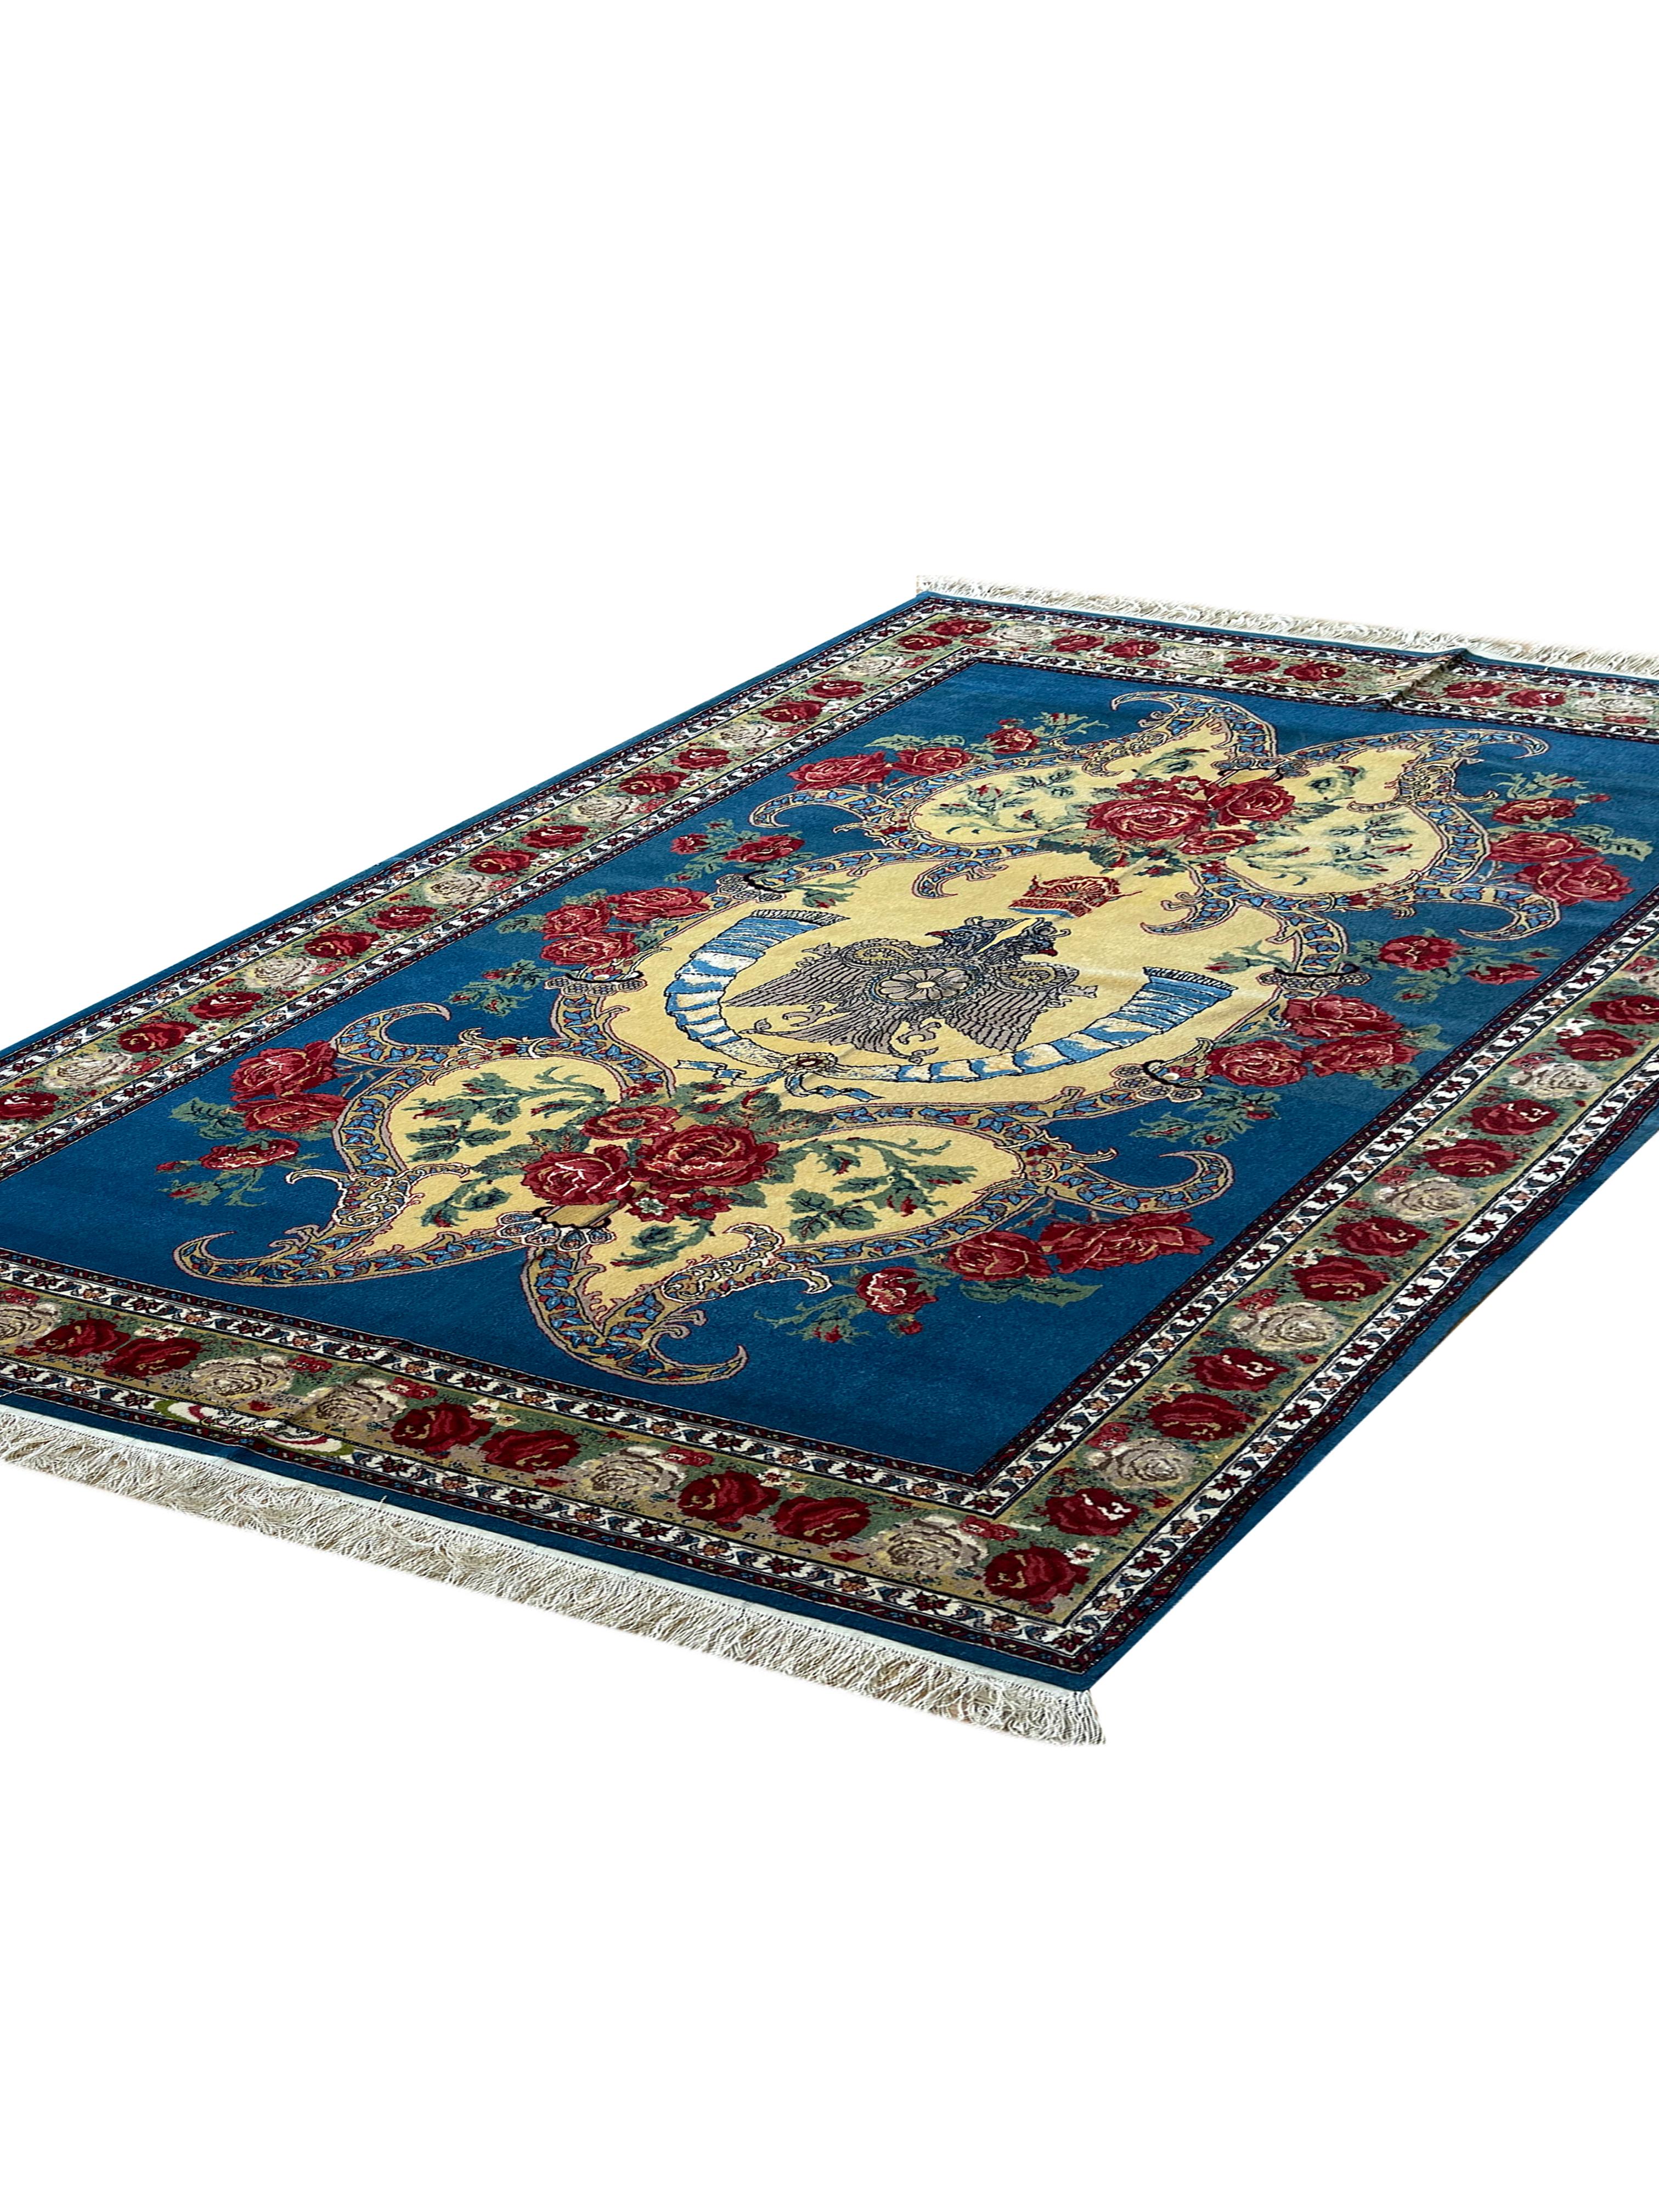 Iraqi Exclusive Floral Rug, Blue Silk Handwoven Carpet, Symbolic Kurdish Oriental Rug For Sale